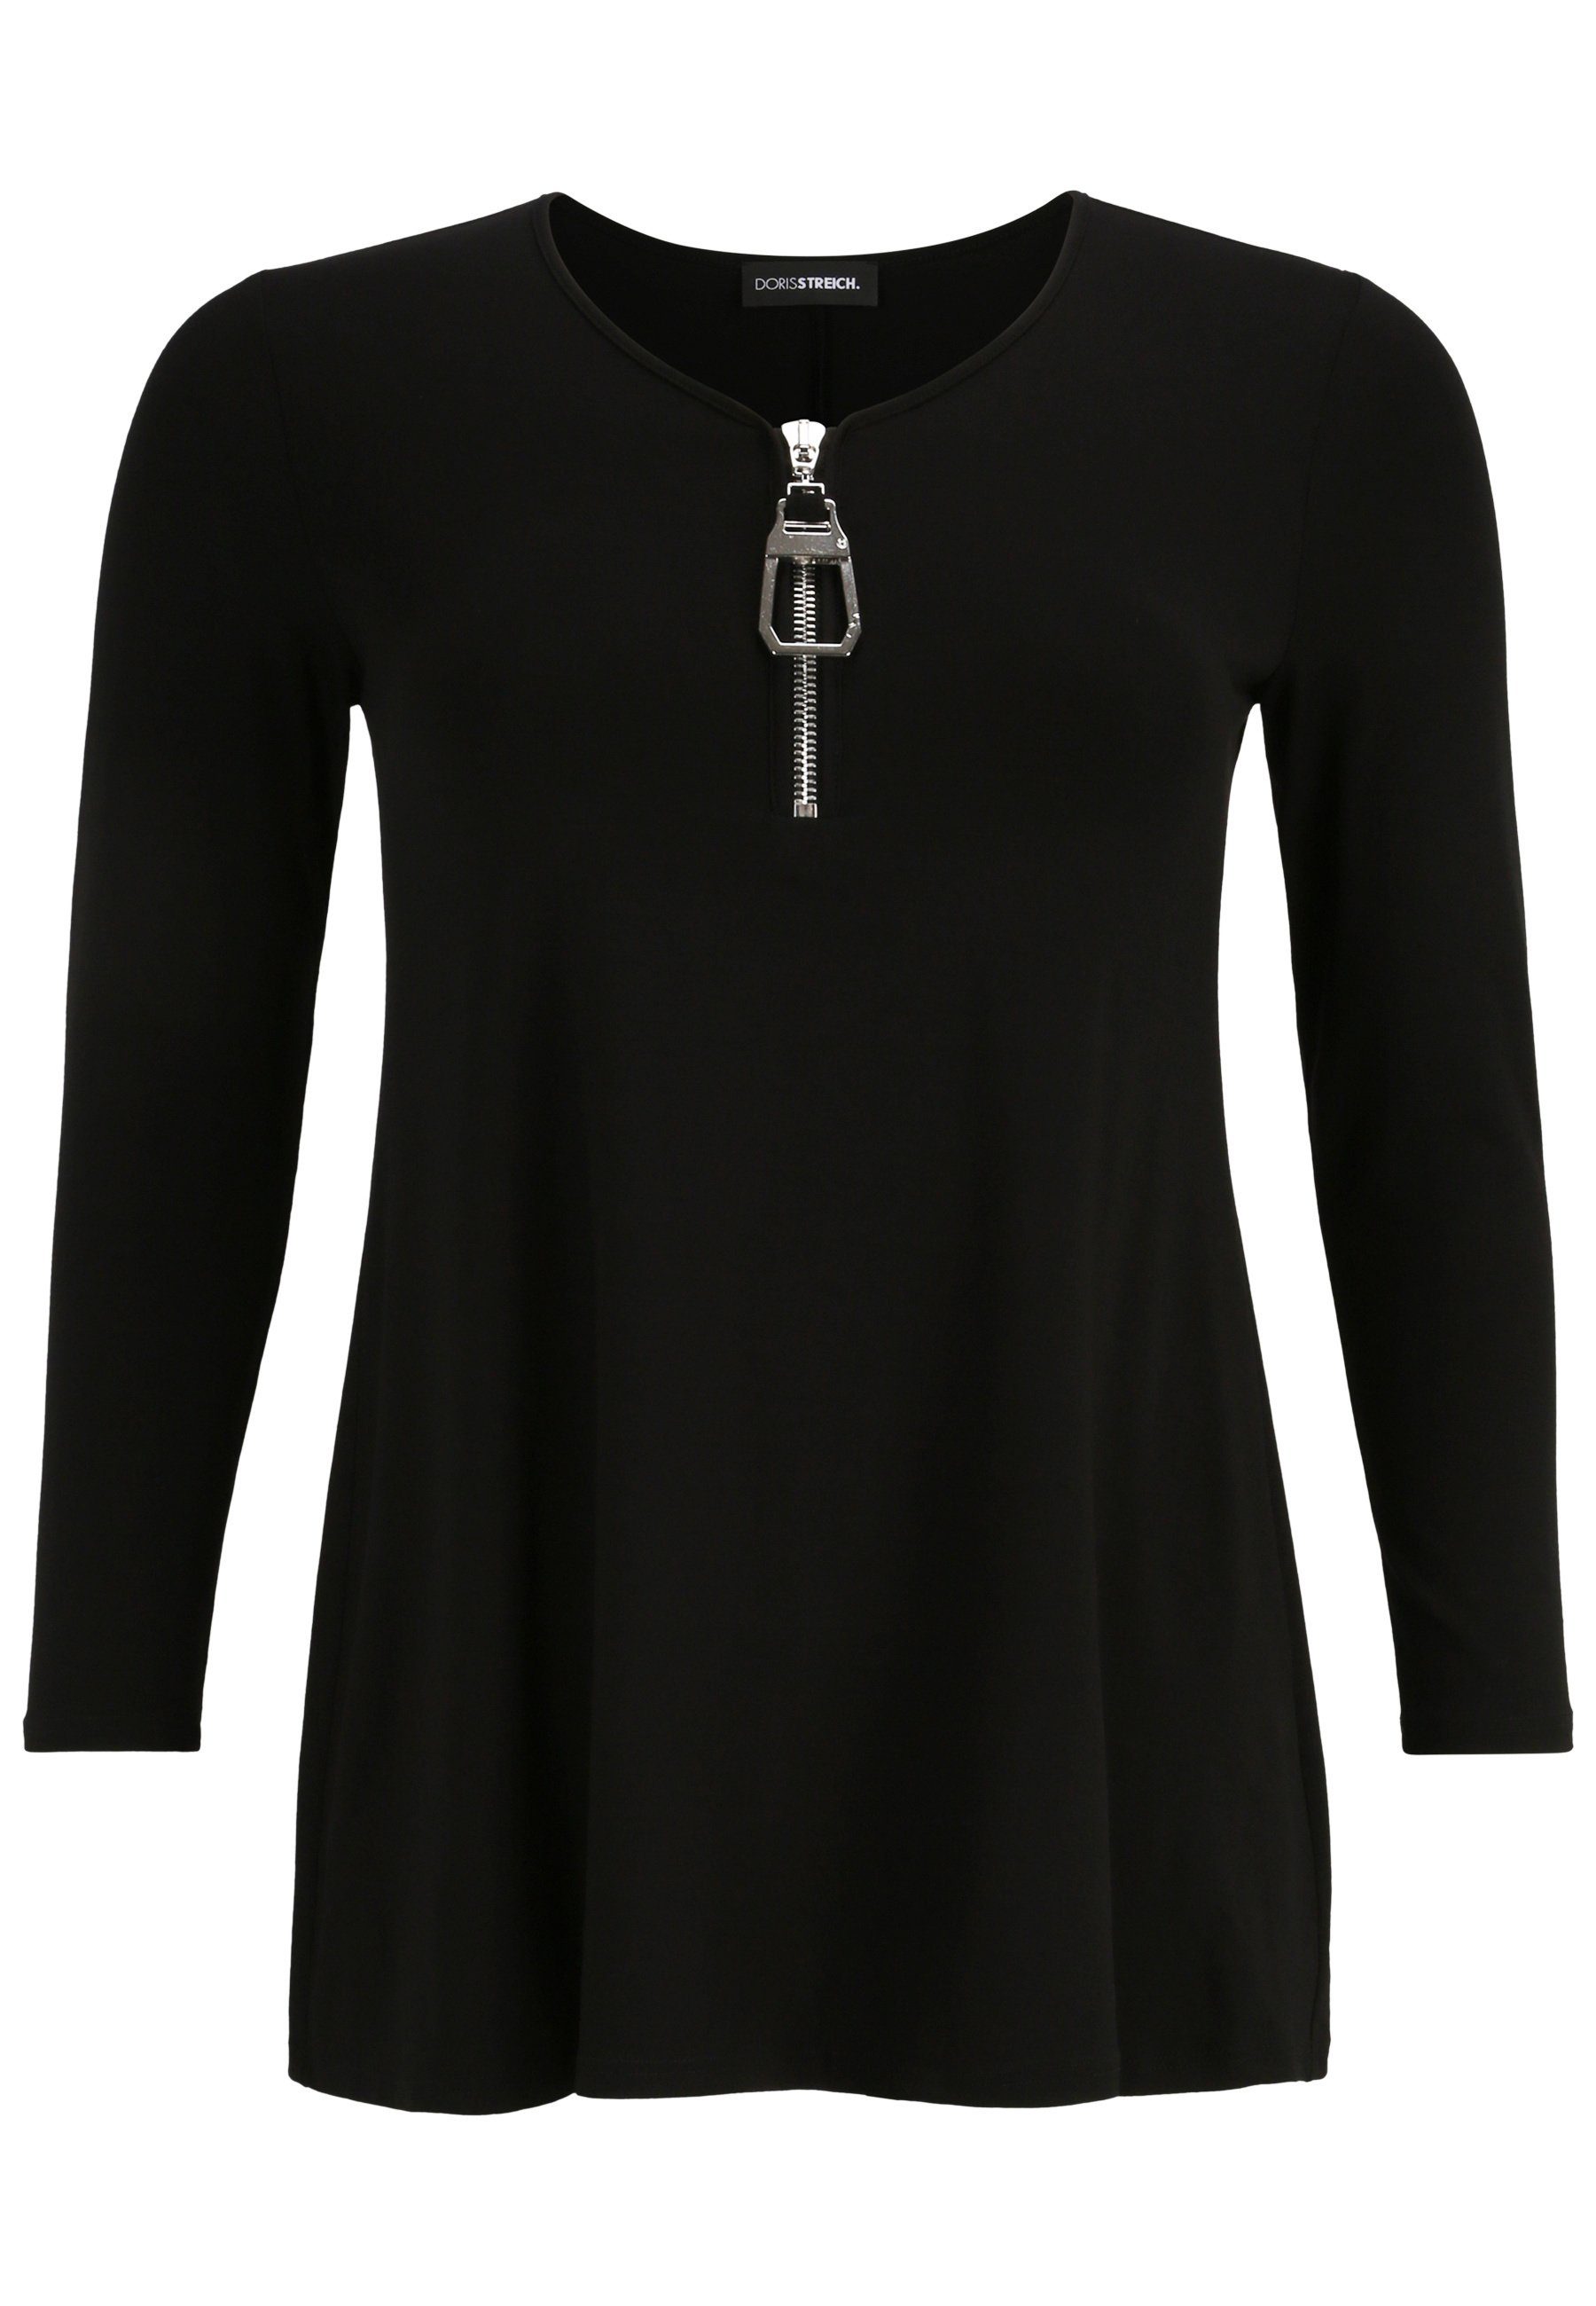 Doris Streich Shirtbluse Long-Shirt dekorativem mit Reißverschluss